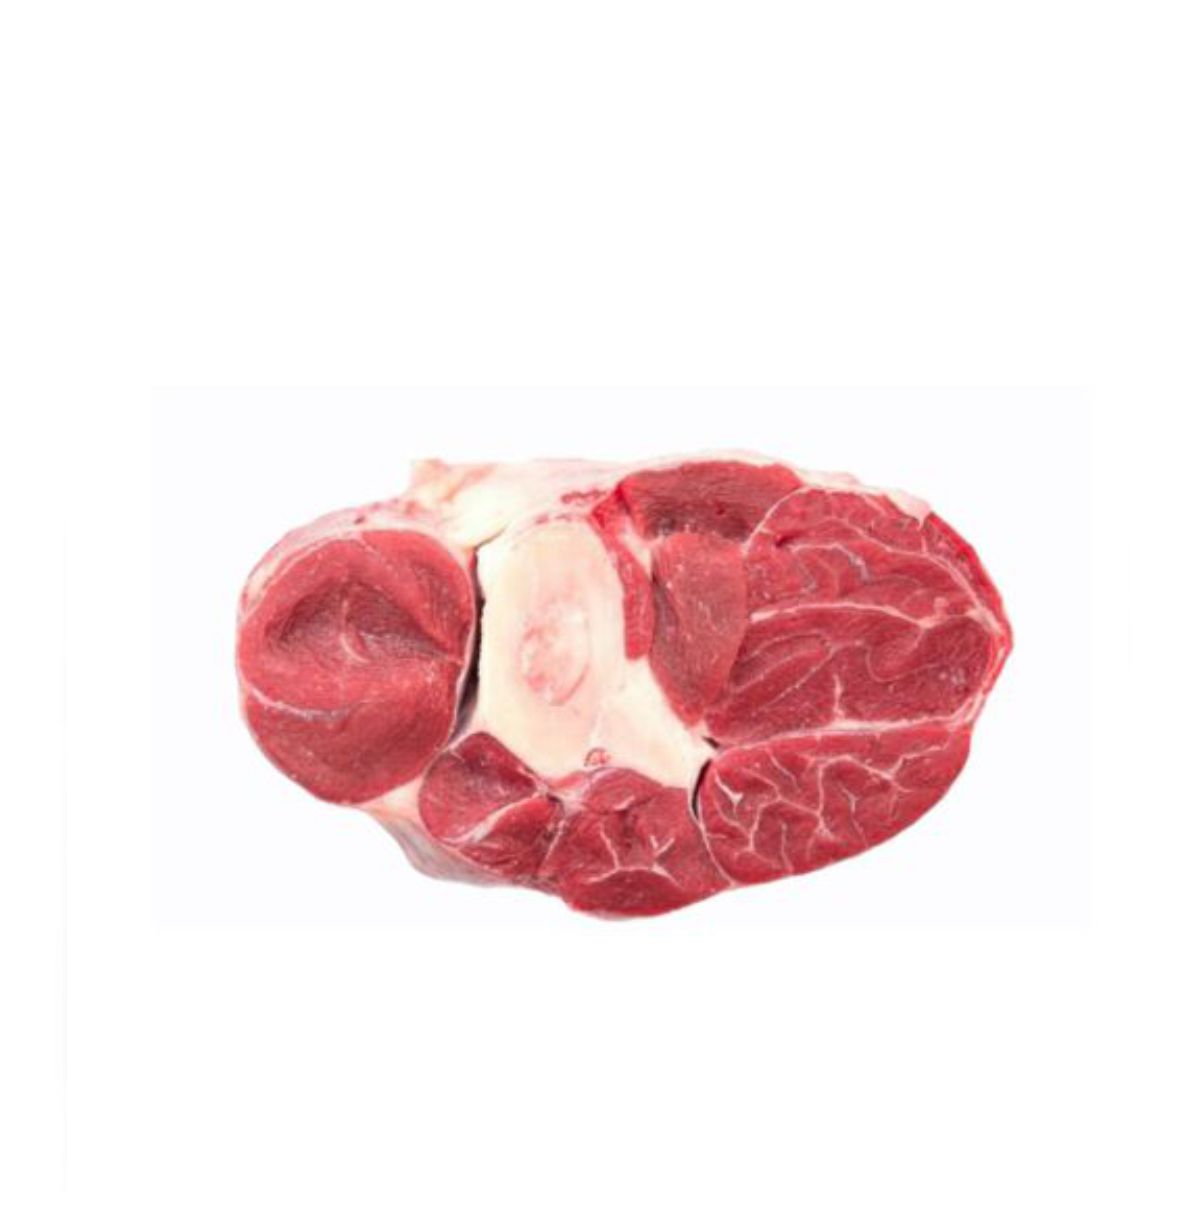 Carne de ternera para guiso, Viande de bœuf pour ragoût - Superhalal